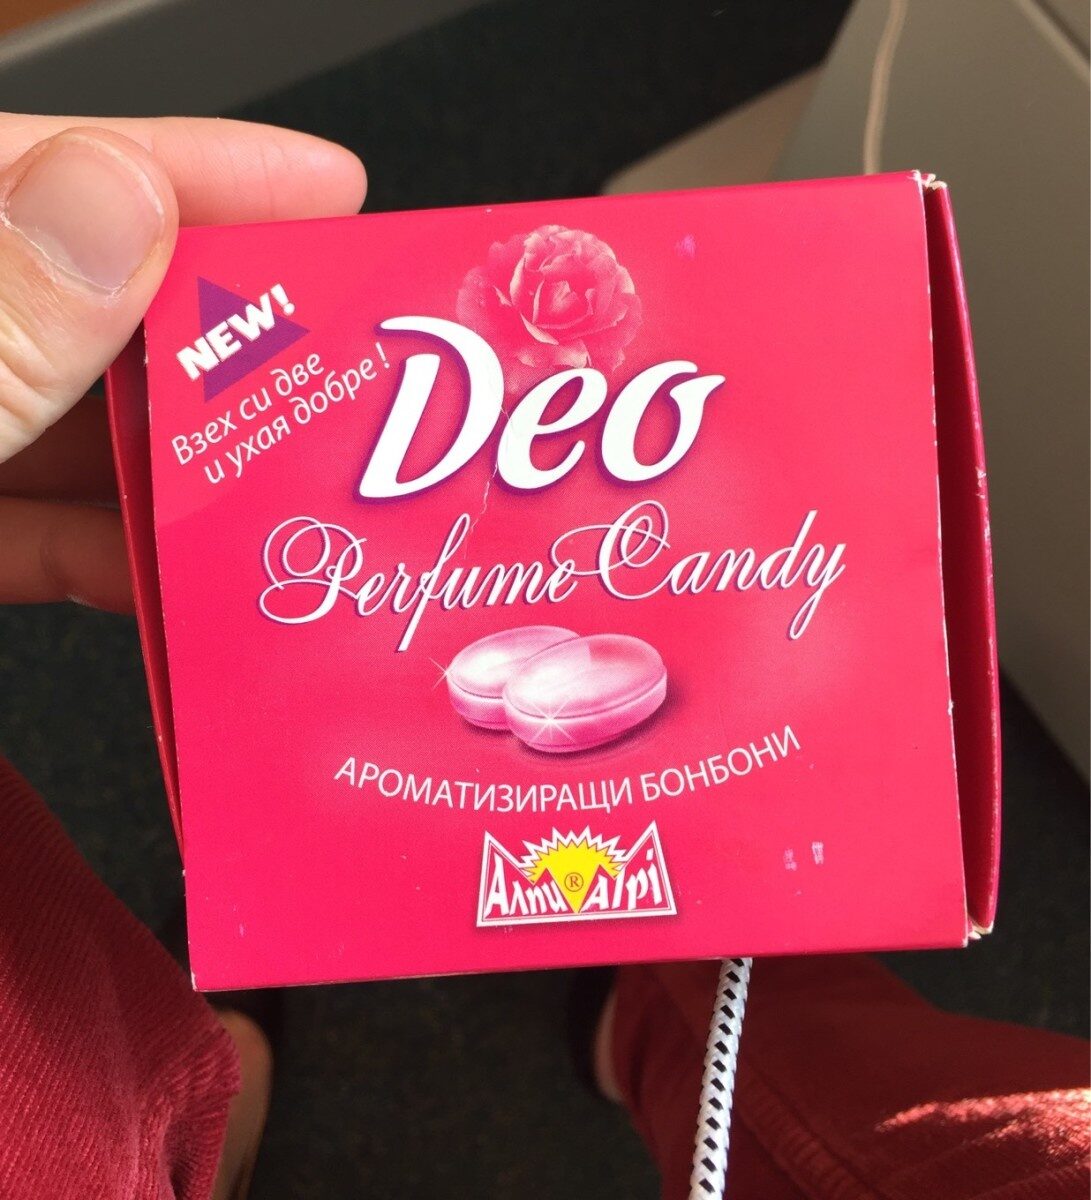 Deo perfume candy - 製品 - fr